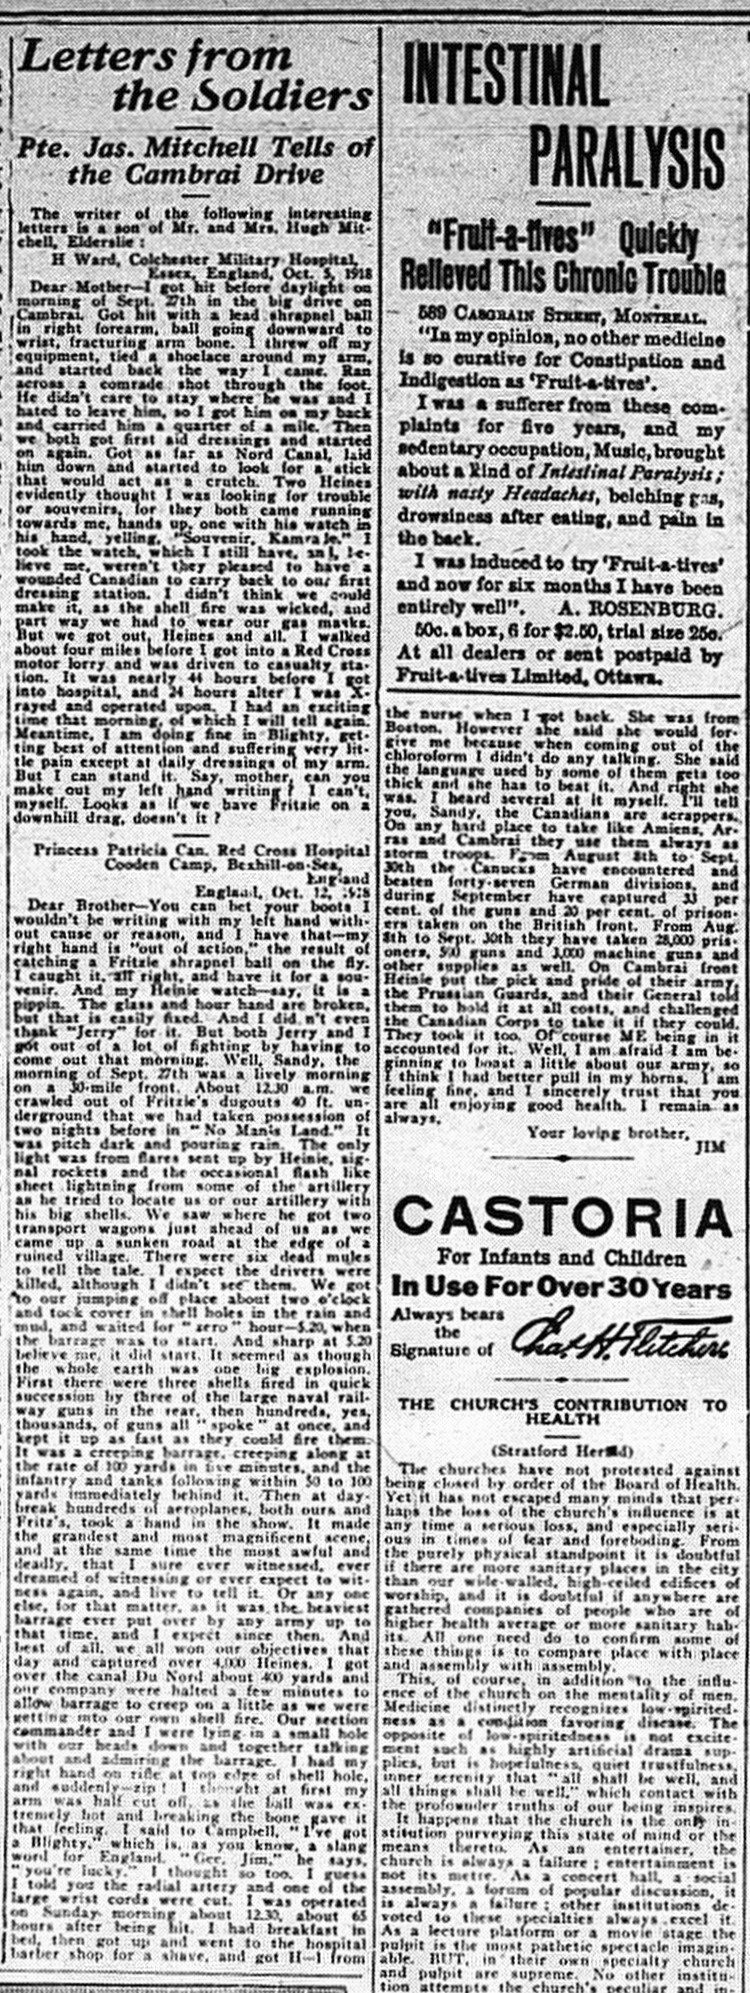 Paisley Advocate, November 13, 1918